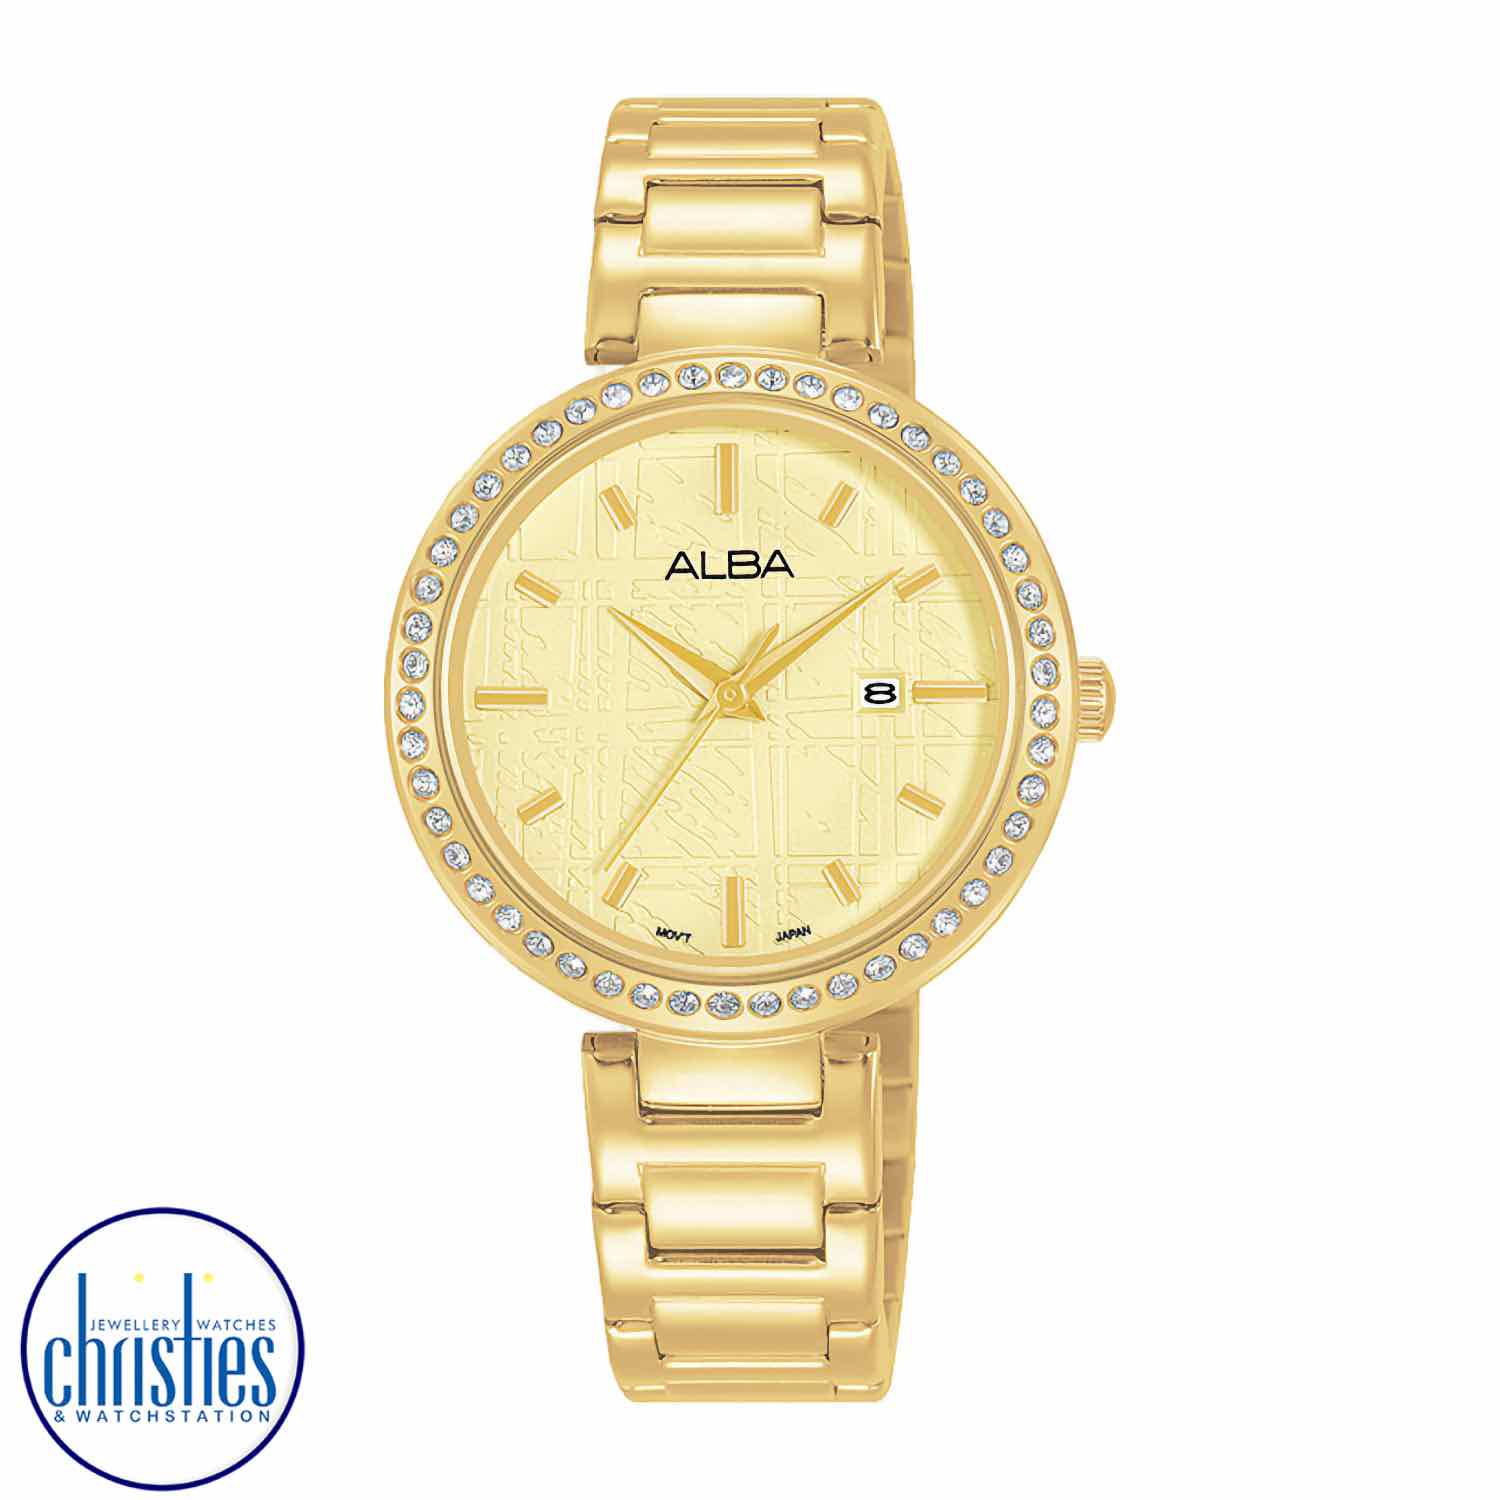 AH7X36X1 ALBA Prestige Ladies Watch ALBA watch original price